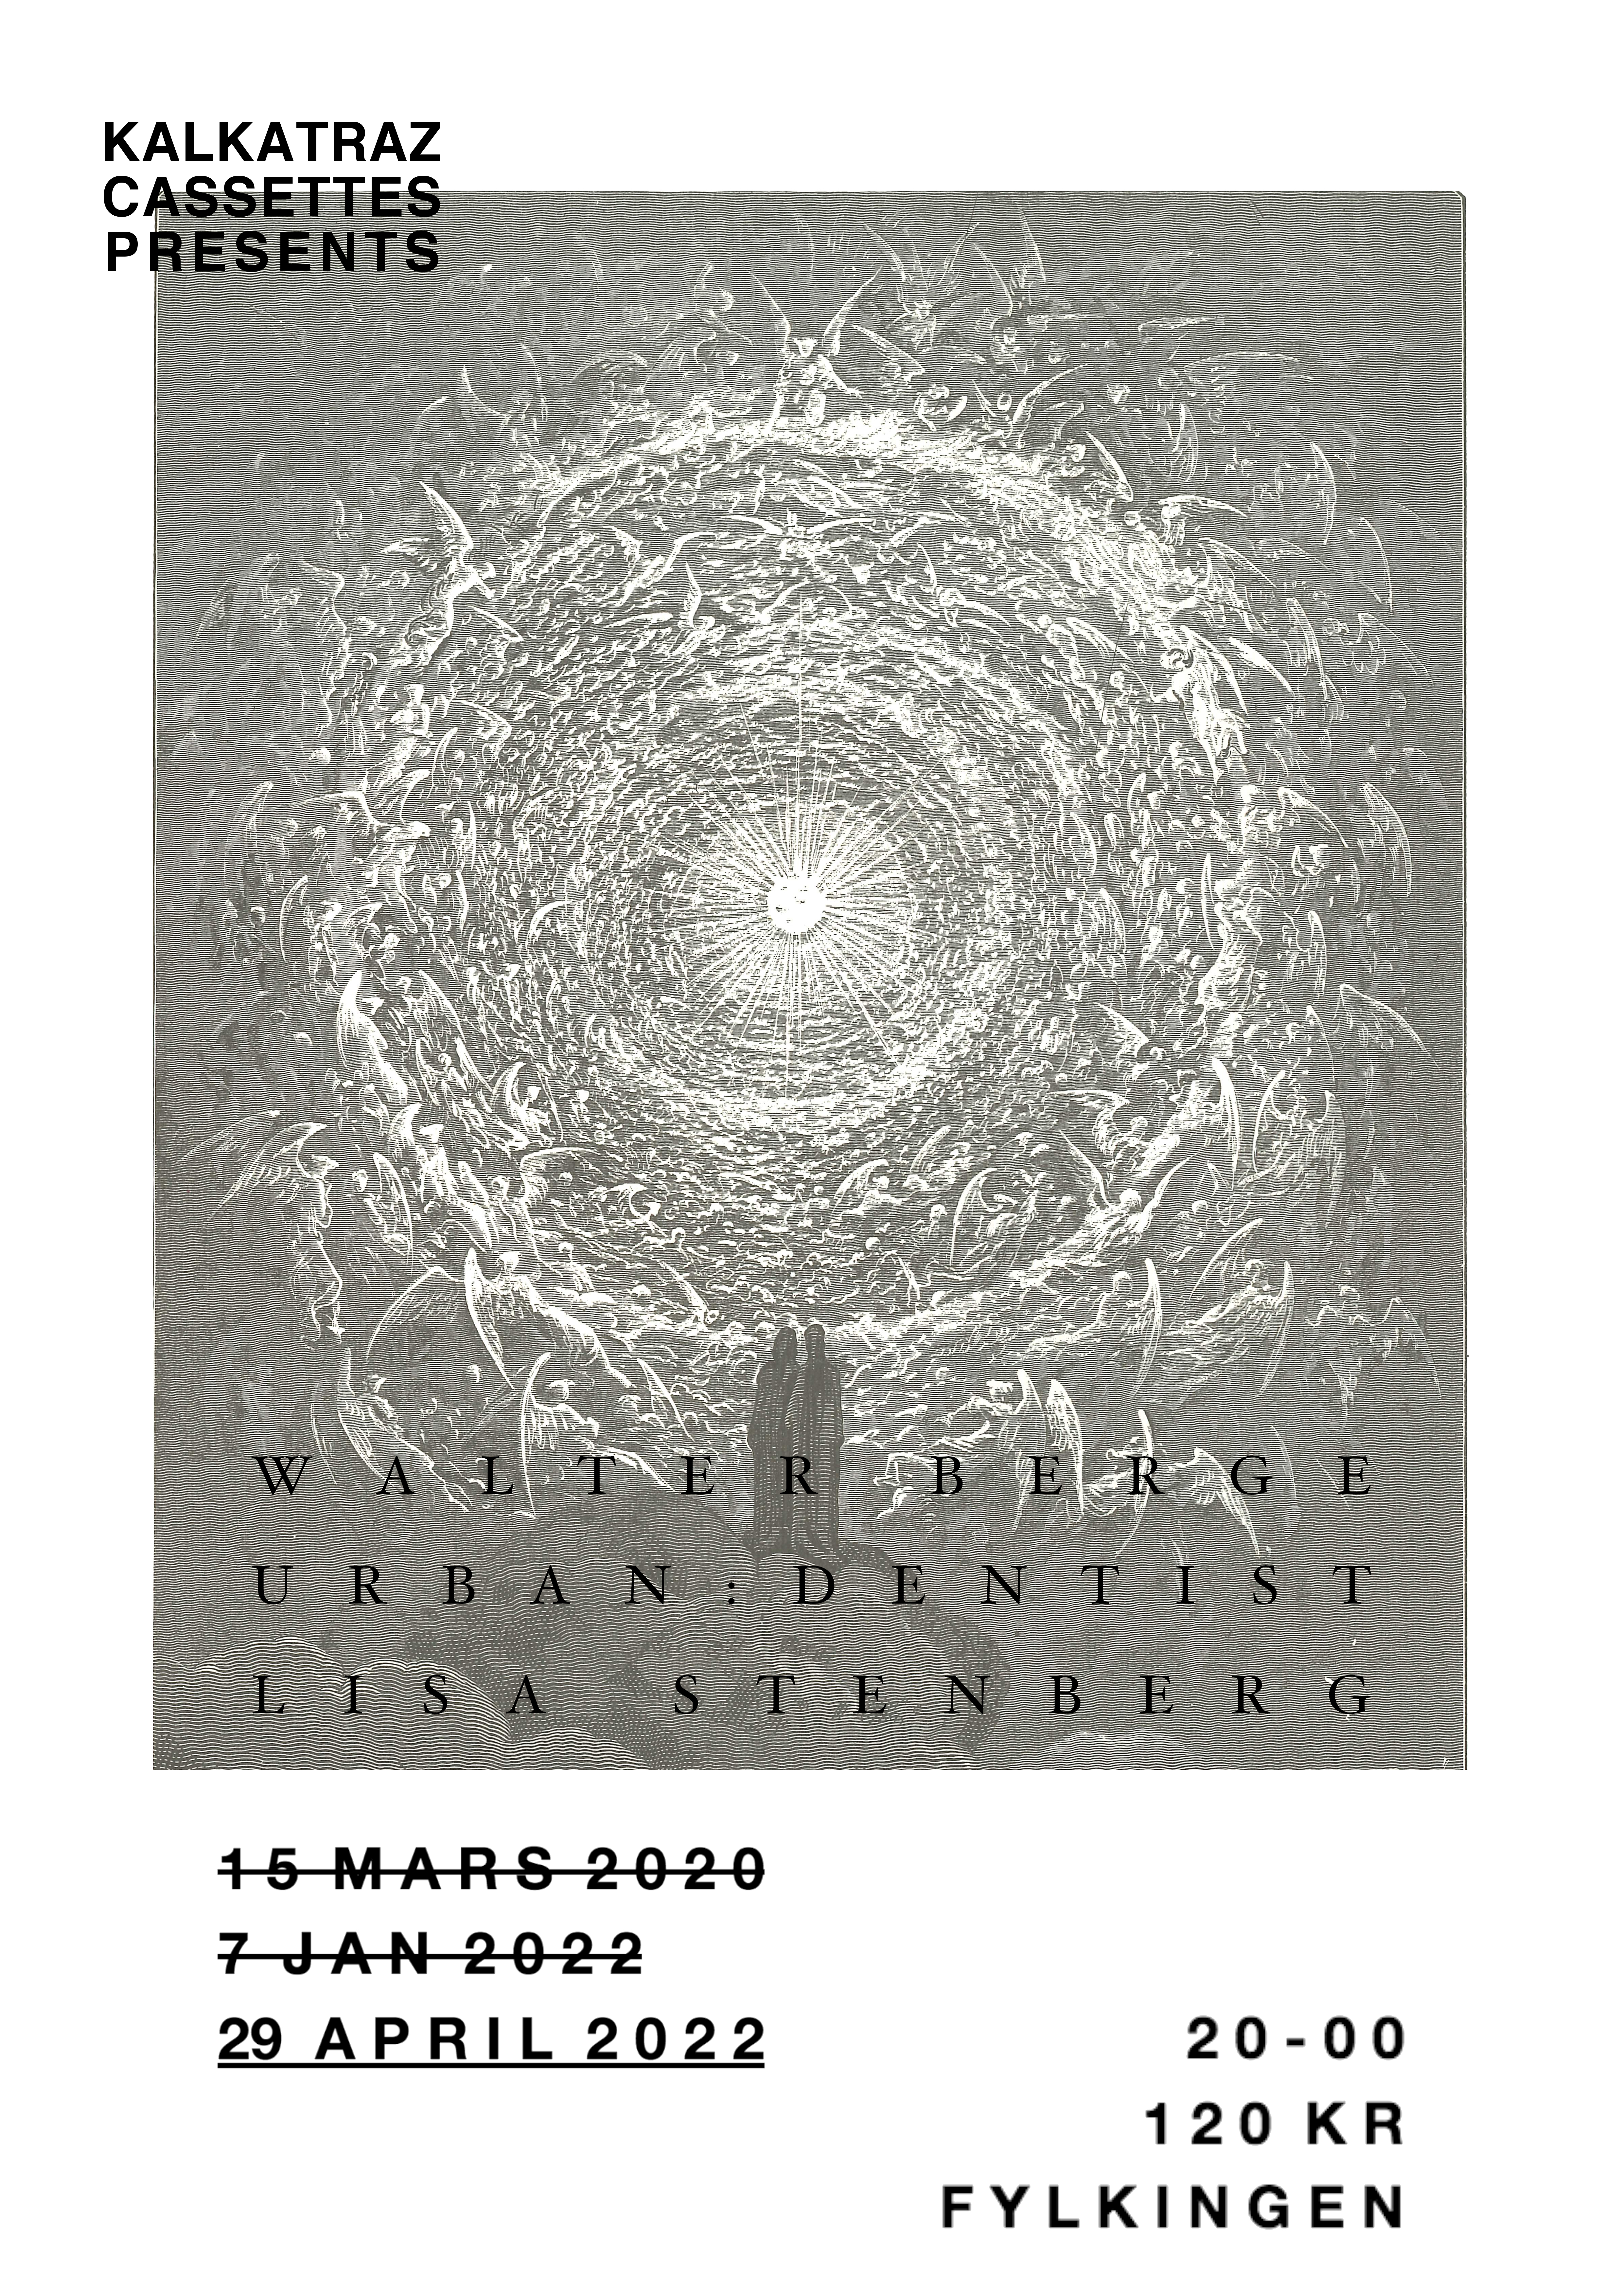 Poster for Kalkatraz Presents Walter Berge Event